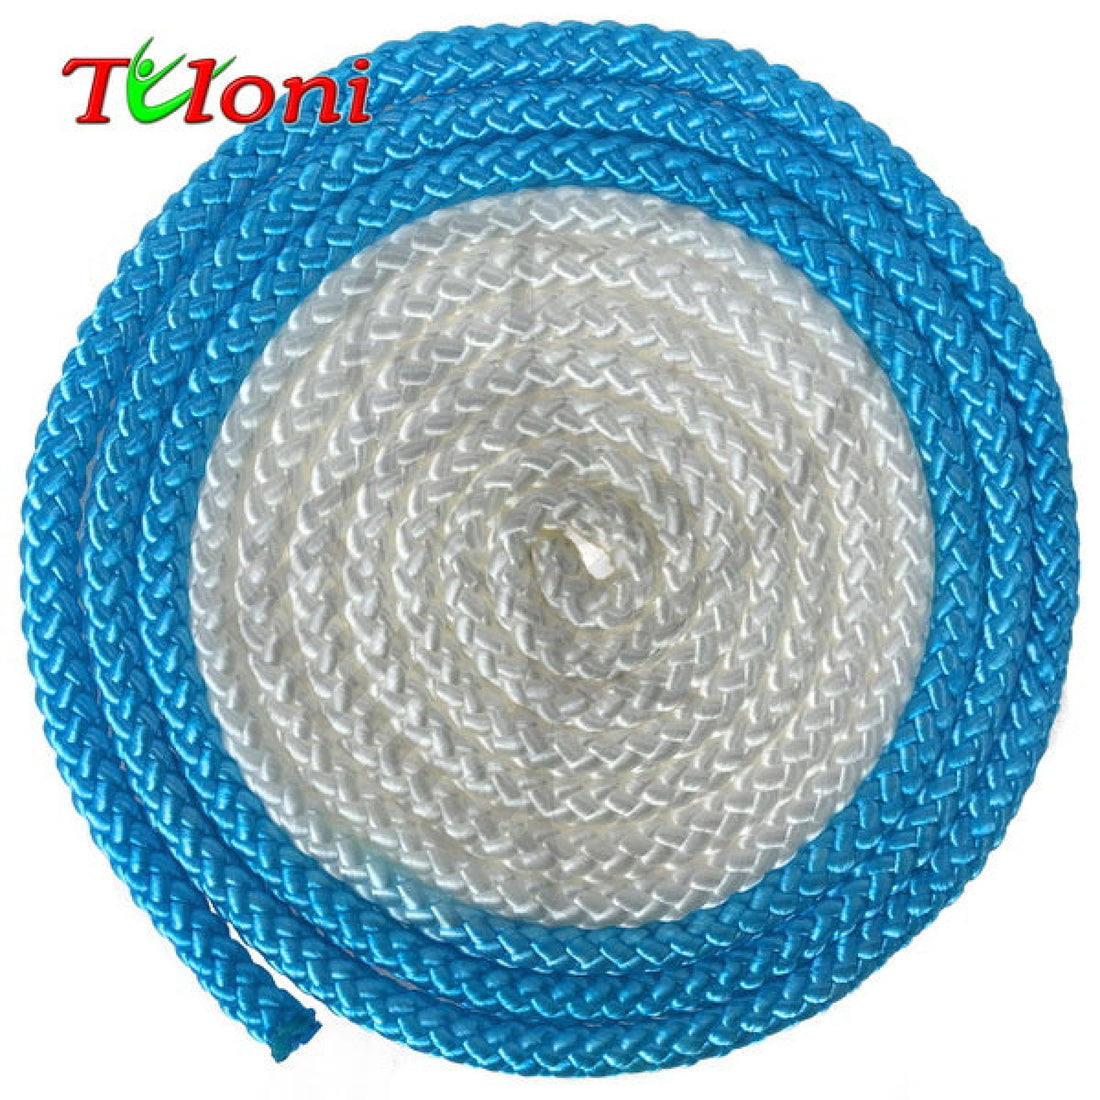 Tuloni Multicolour Rope 3M Neon Blue X White Ropes